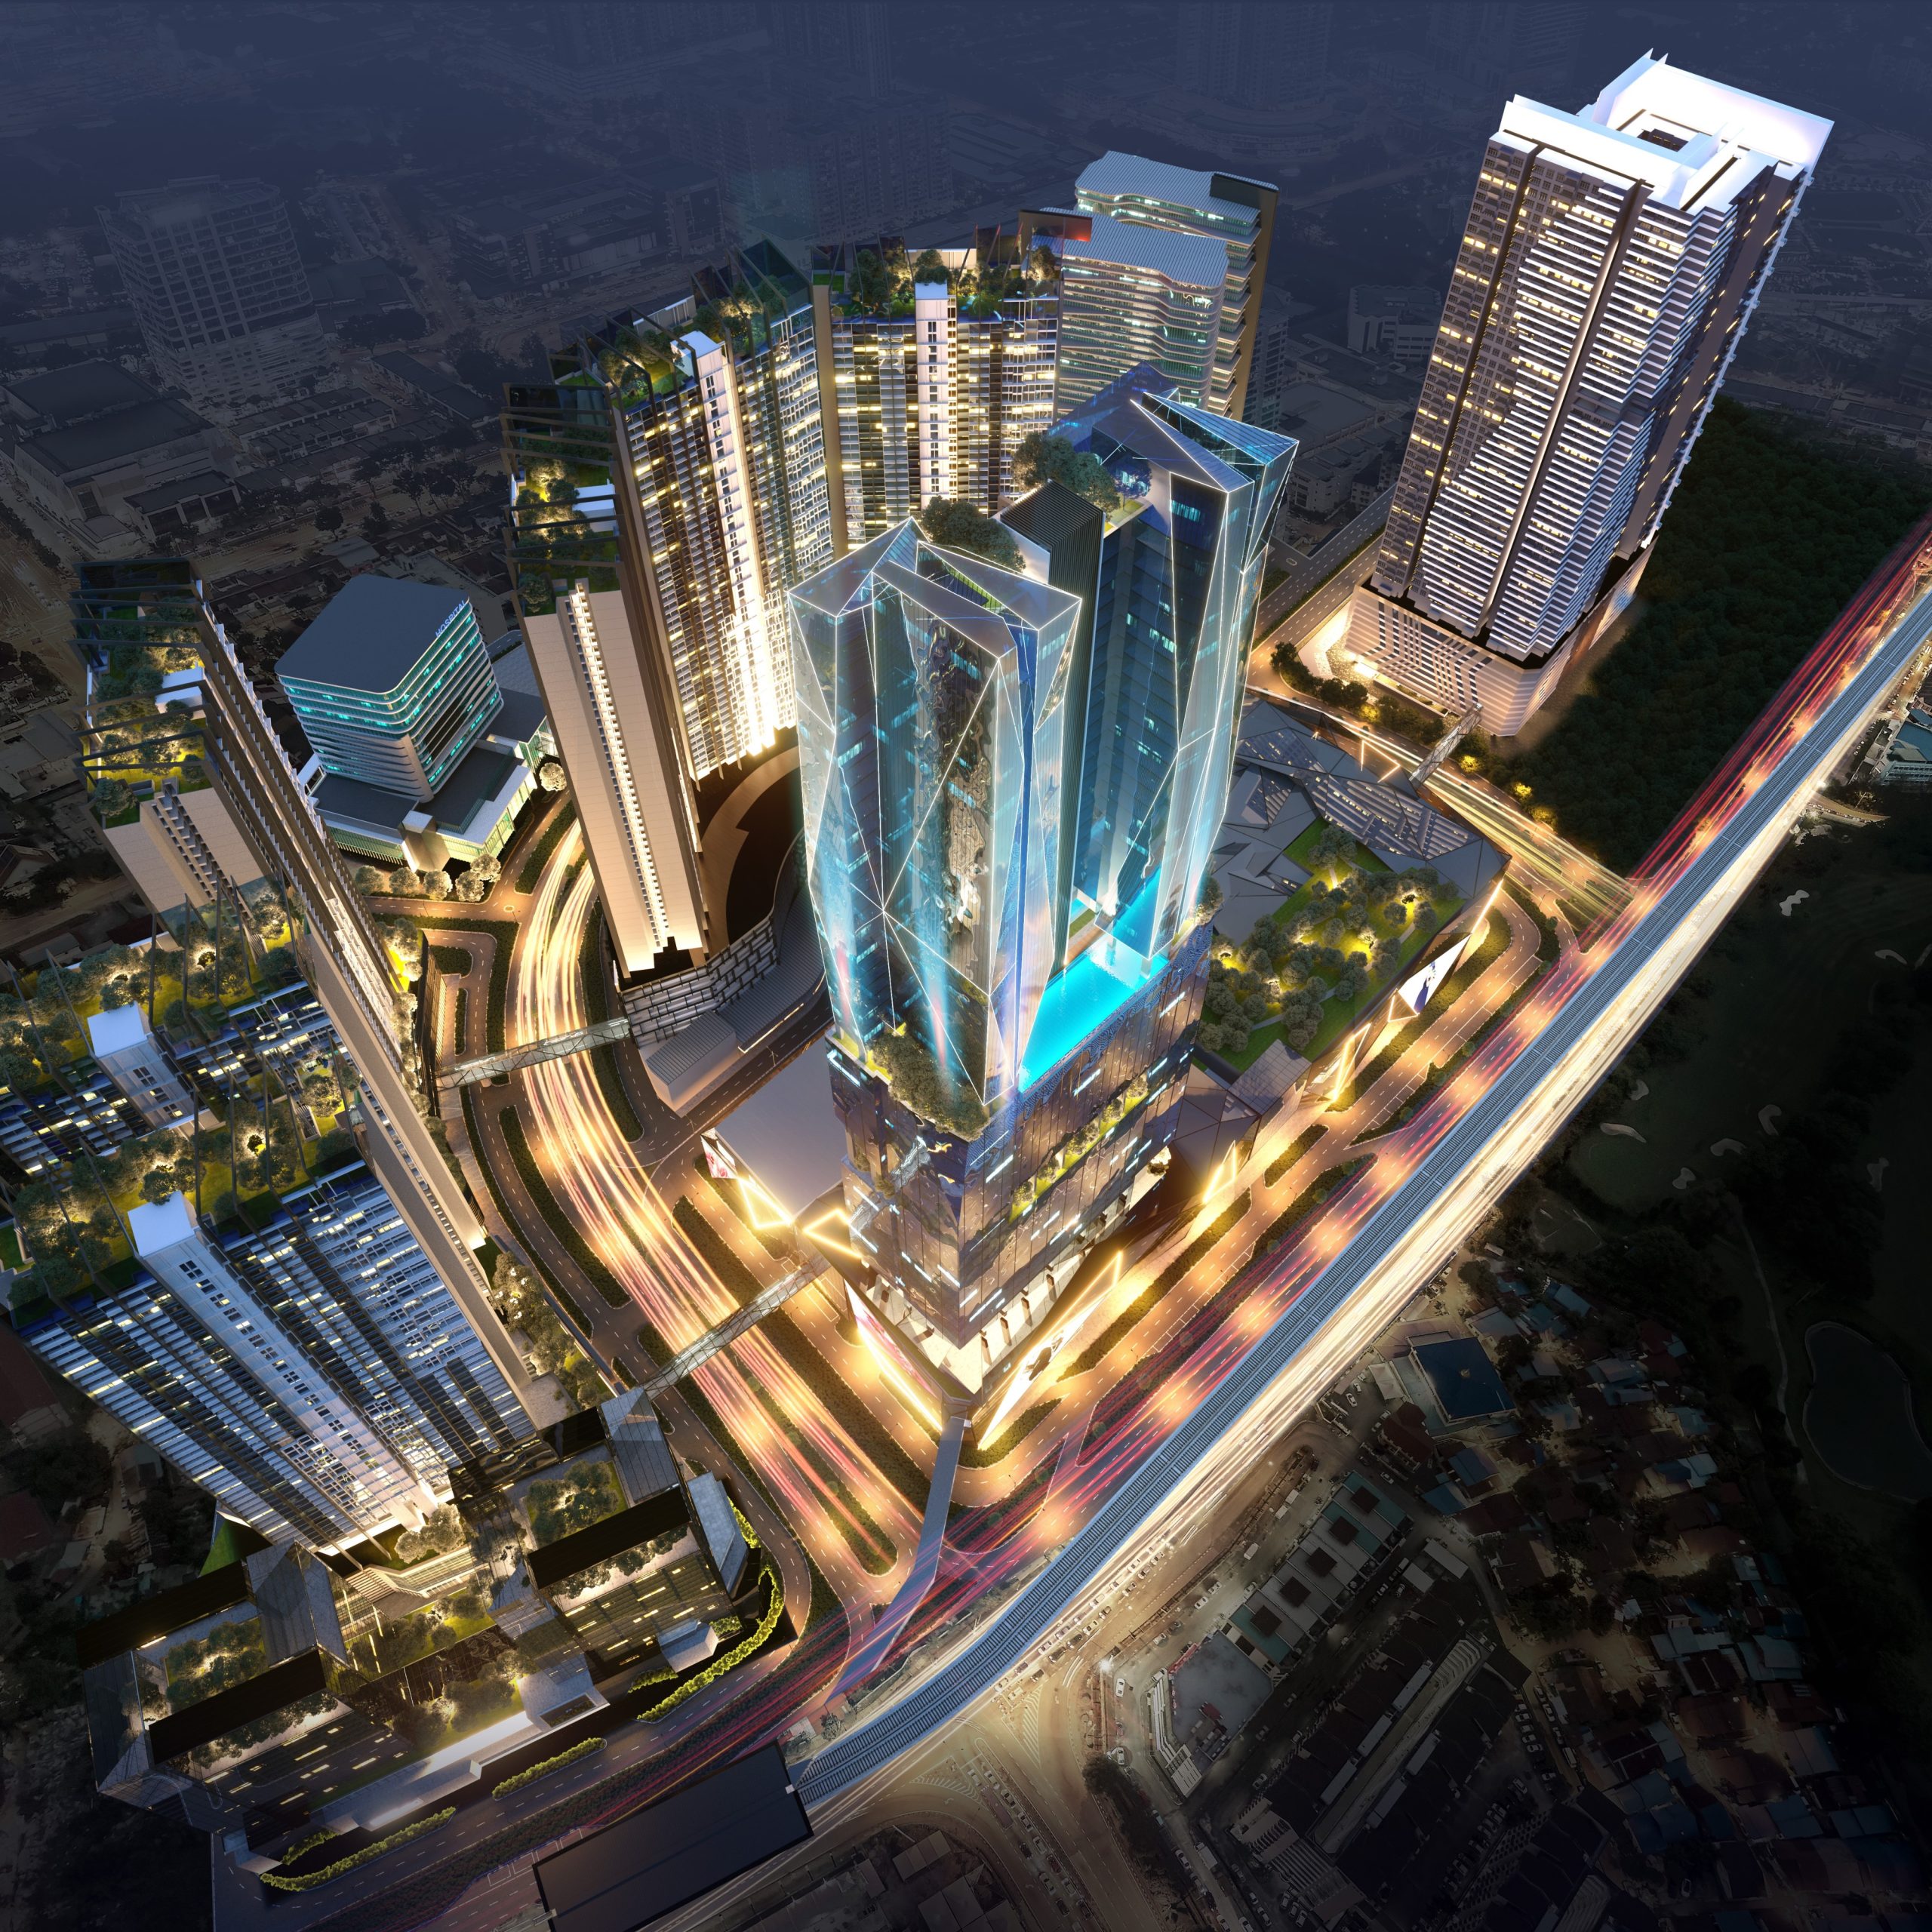 Muze-Picc-penang-international-commercial-city-facilities-malaysia-smart-city-jade-land-properties-international-overseas-investment-檳城國際商業城-設施-馬來西亞-海外物業-投資-翡翠島